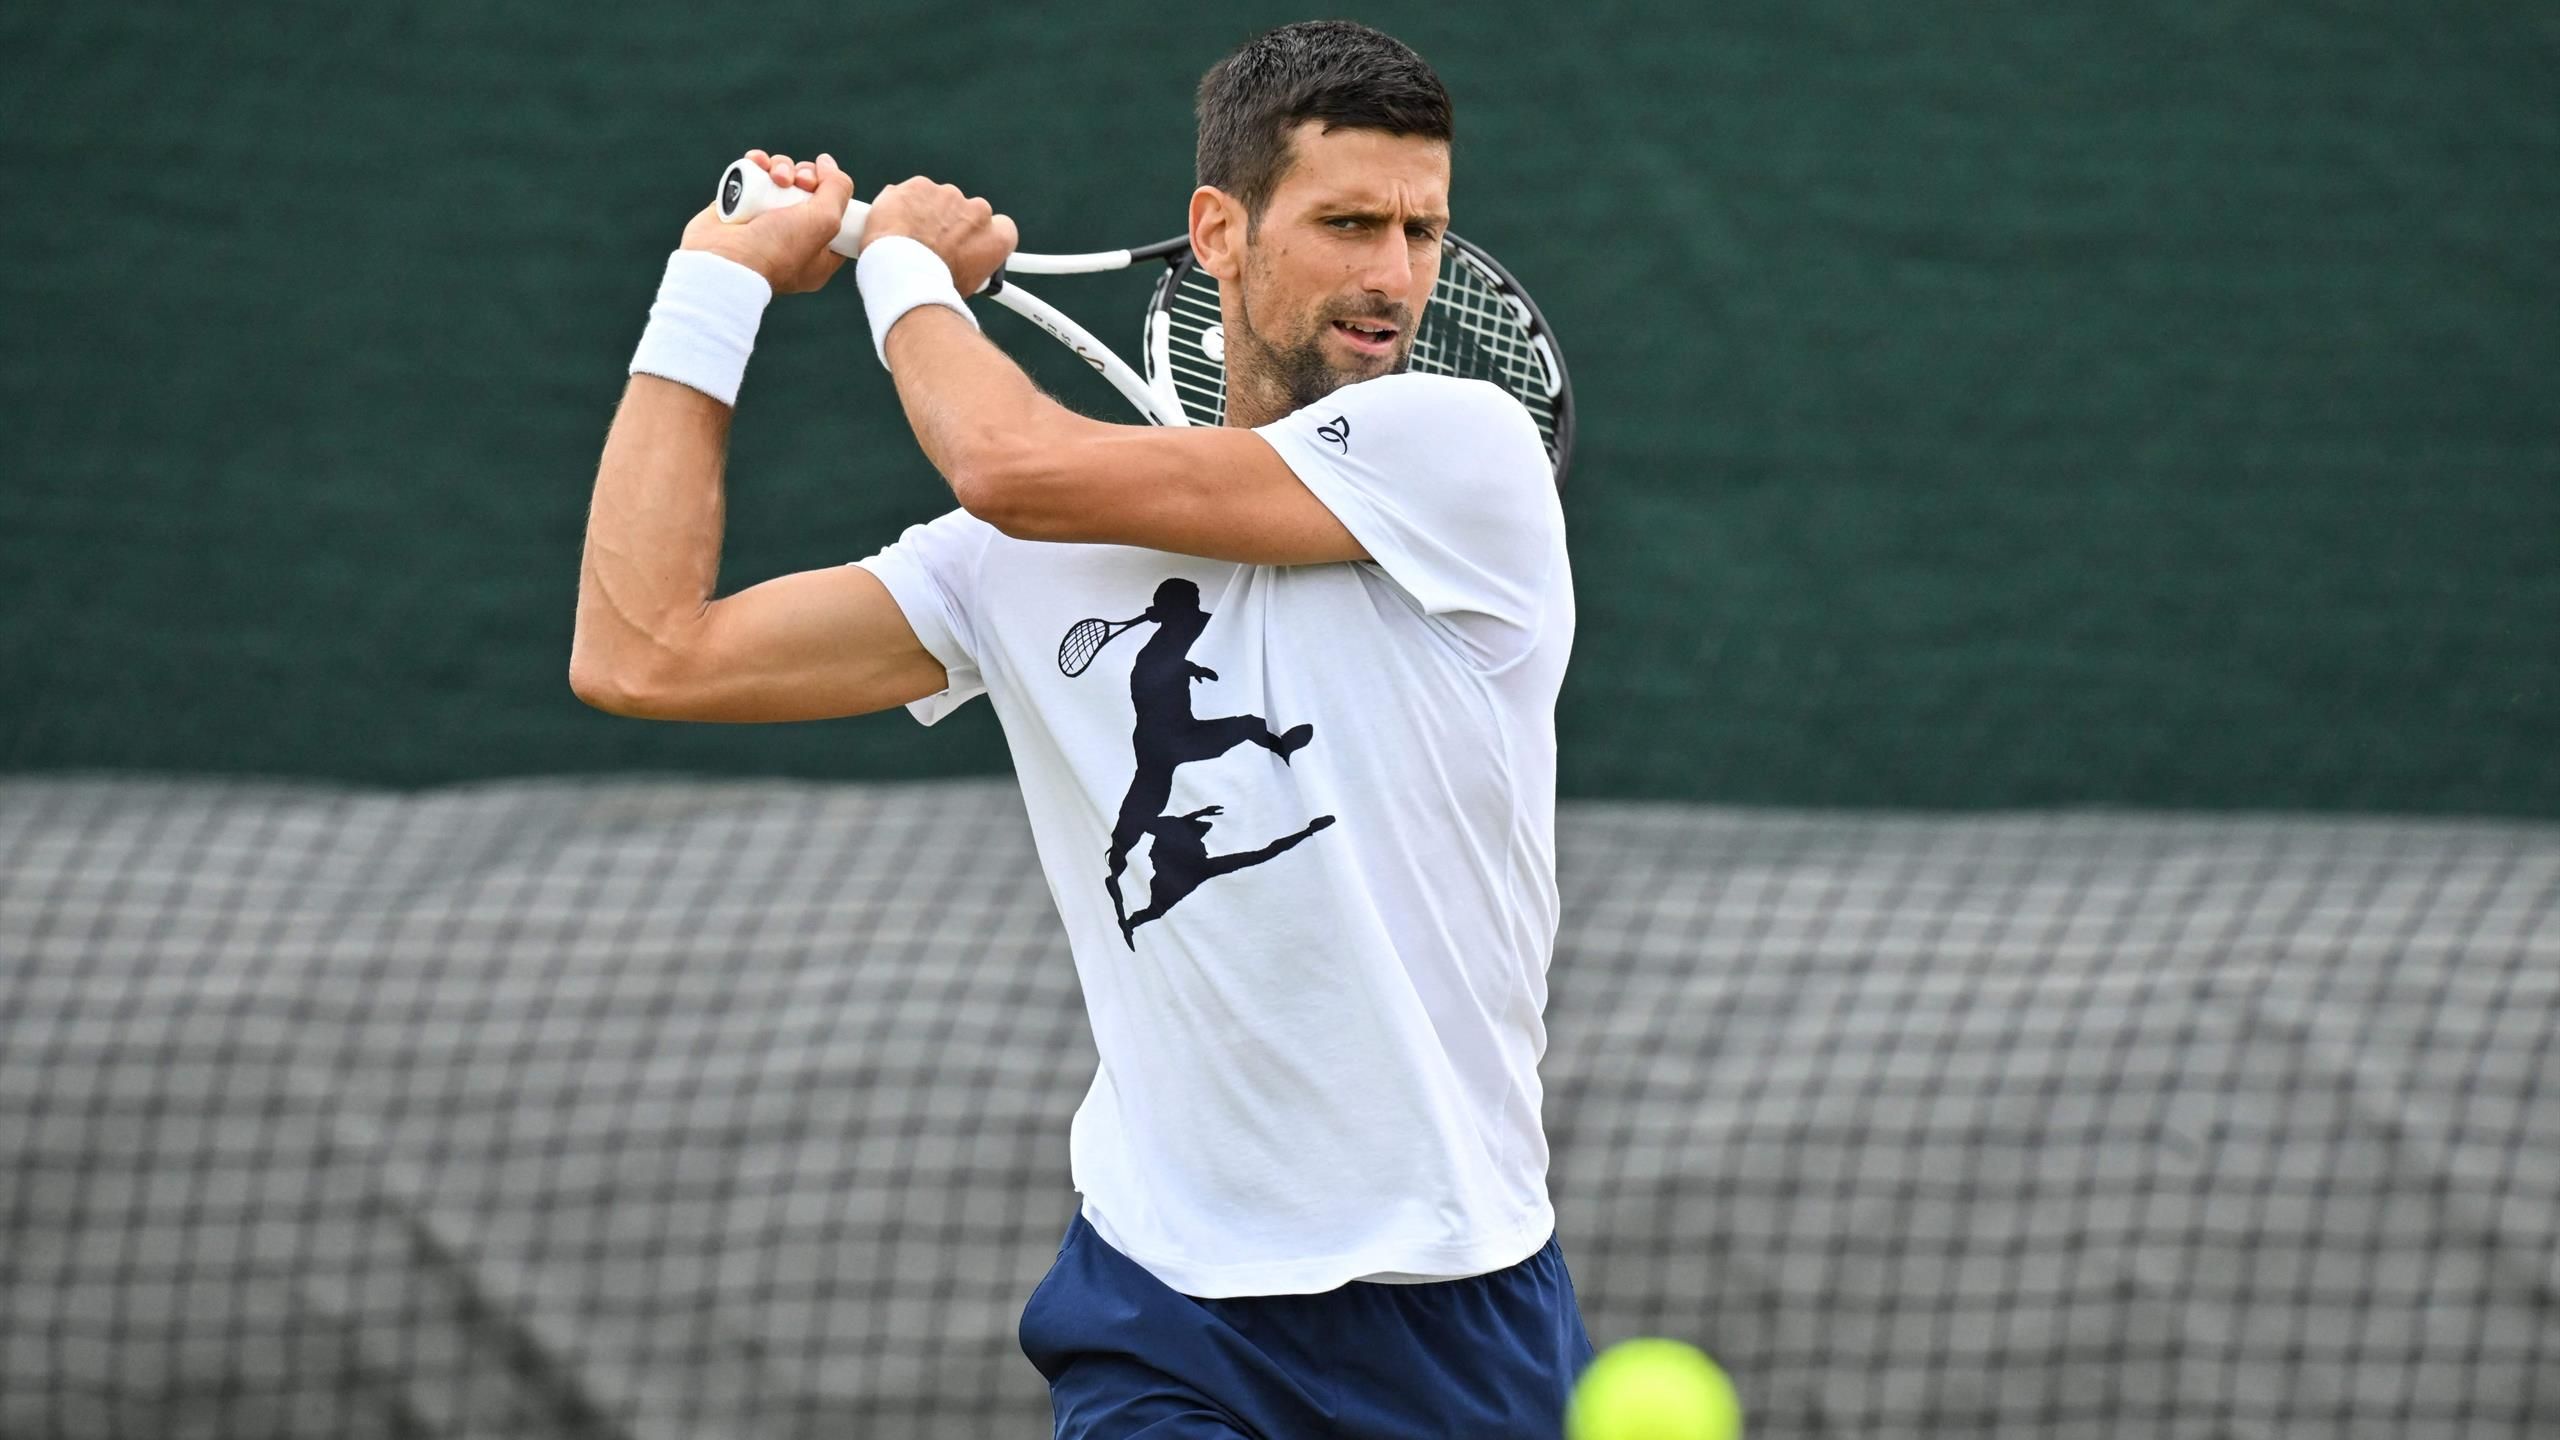 Novak Djokovic will be undisputed tennis GOAT if he wins a few more slams, says Roger Federers ex-coach Ivan Ljubicic